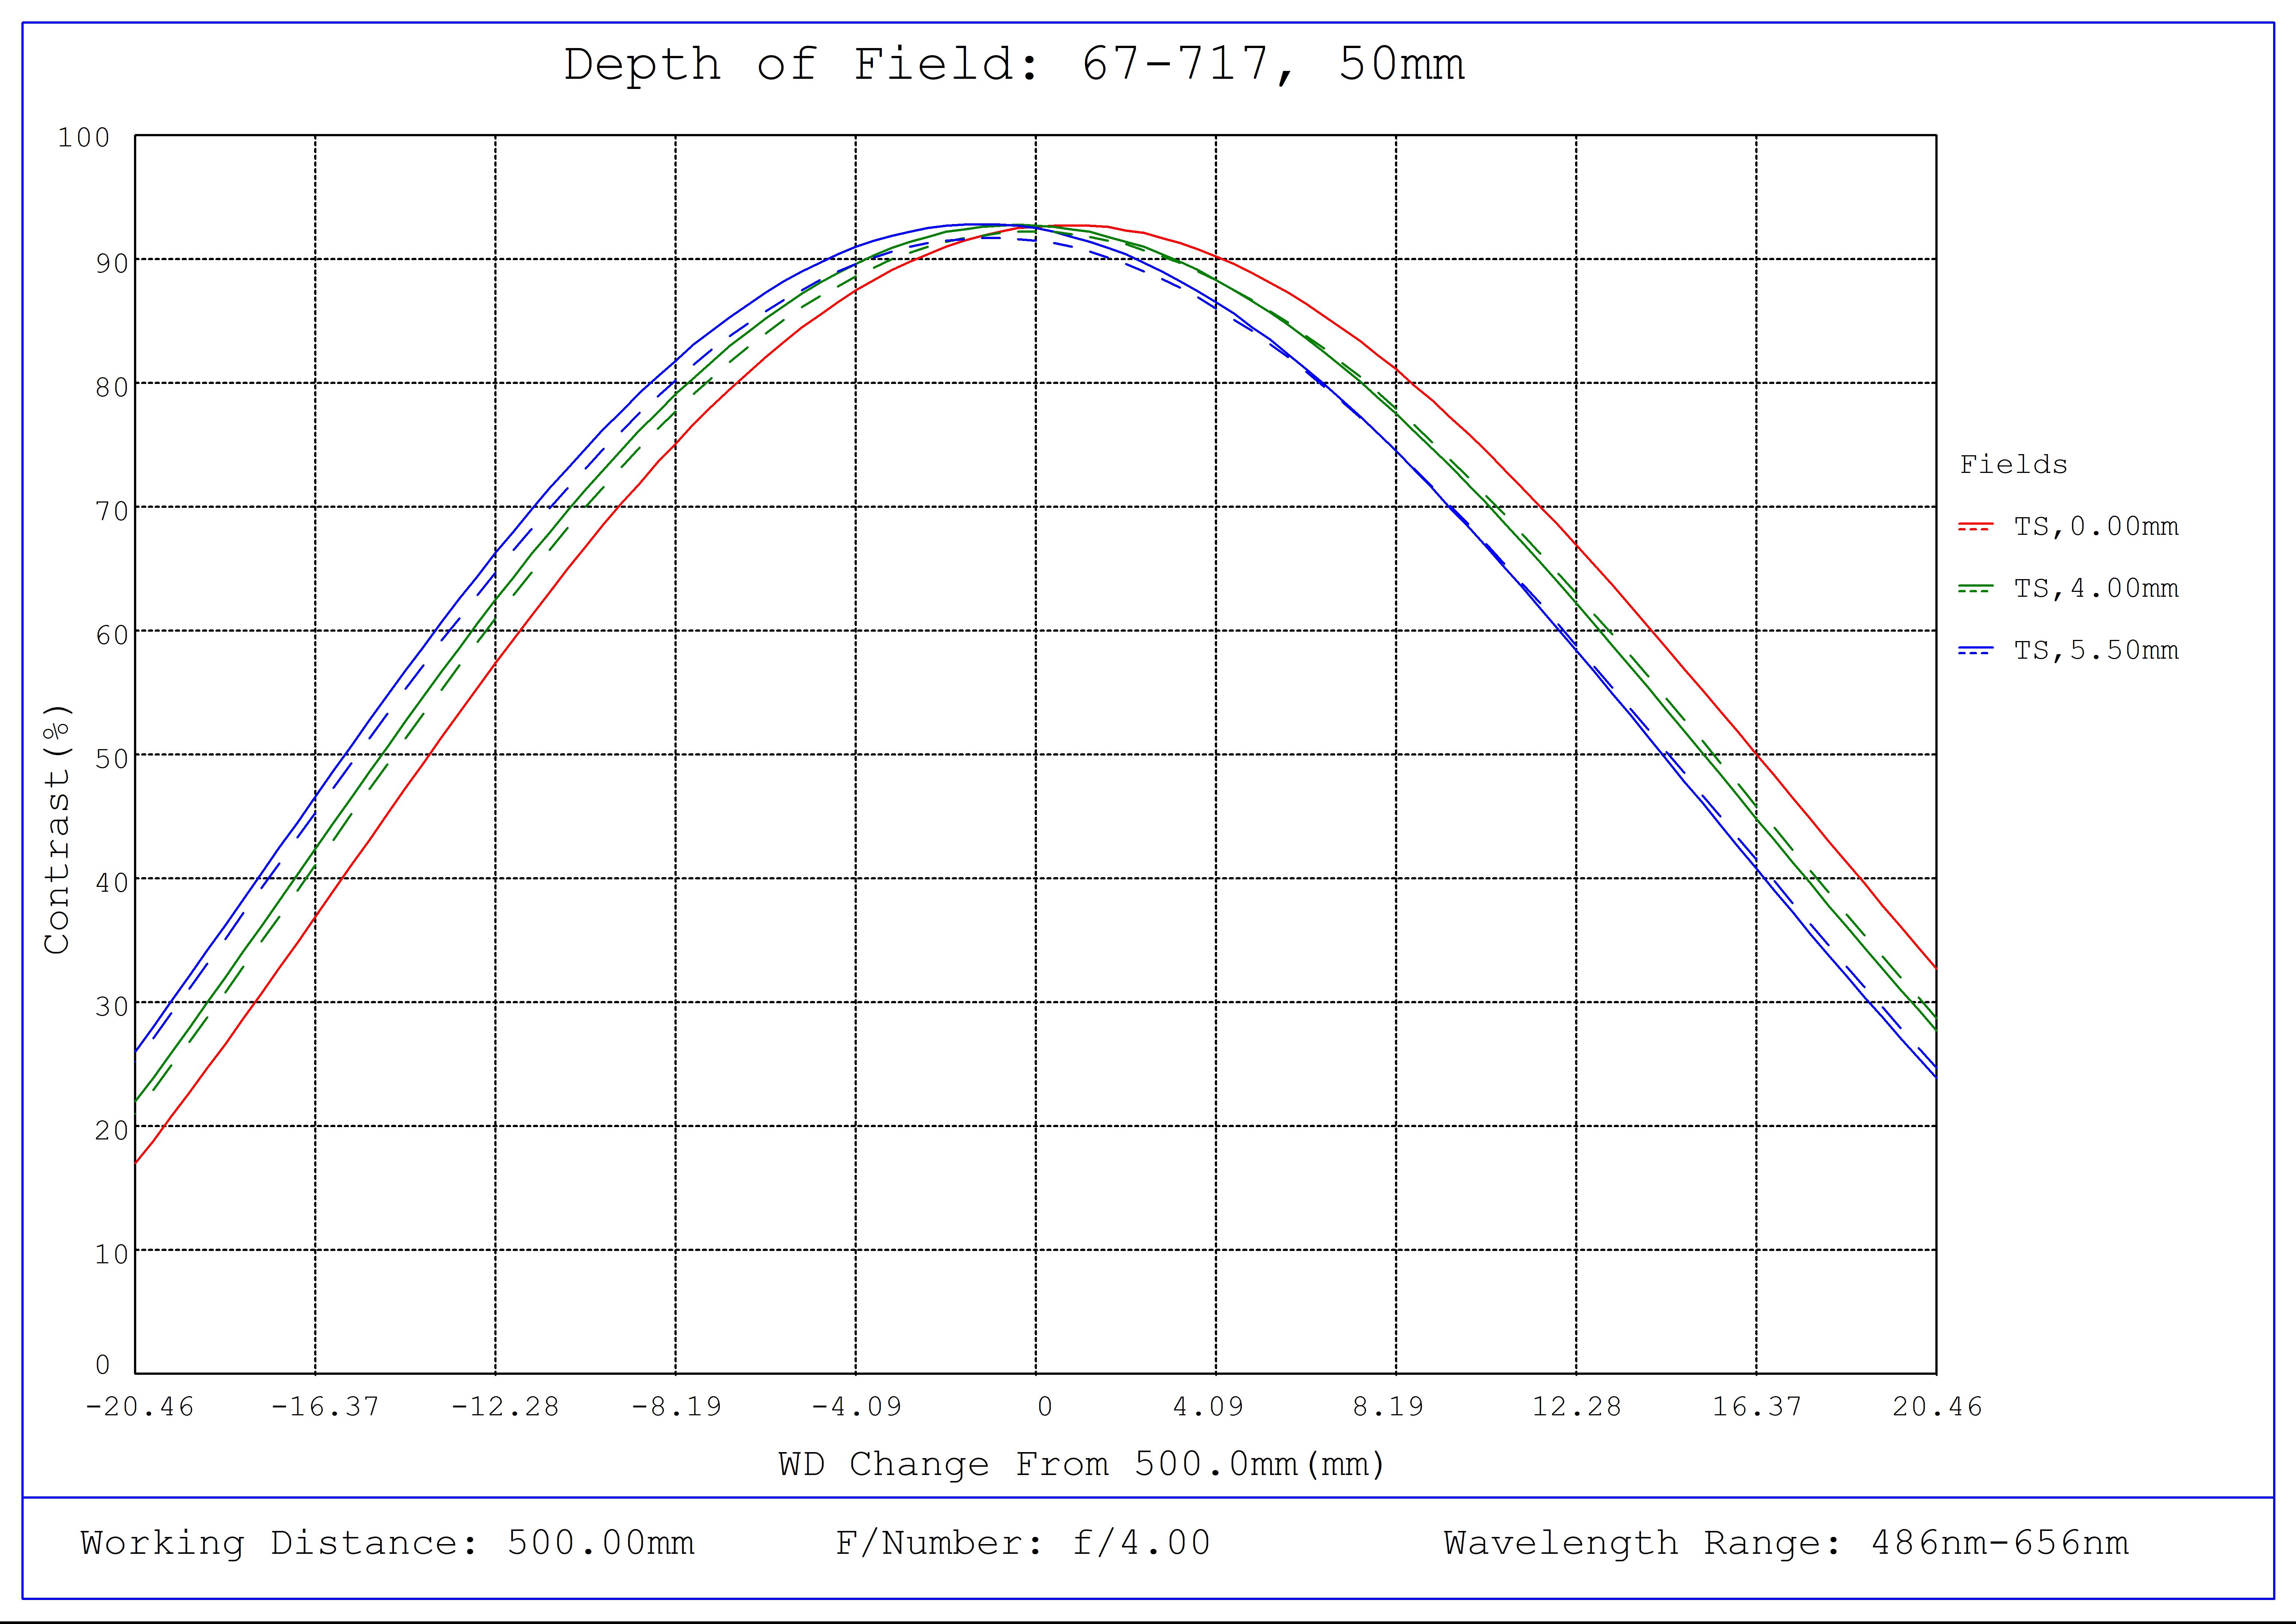 #67-717, 50mm C VIS-NIR Series Fixed Focal Length Lens, Depth of Field Plot, 500mm Working Distance, f4